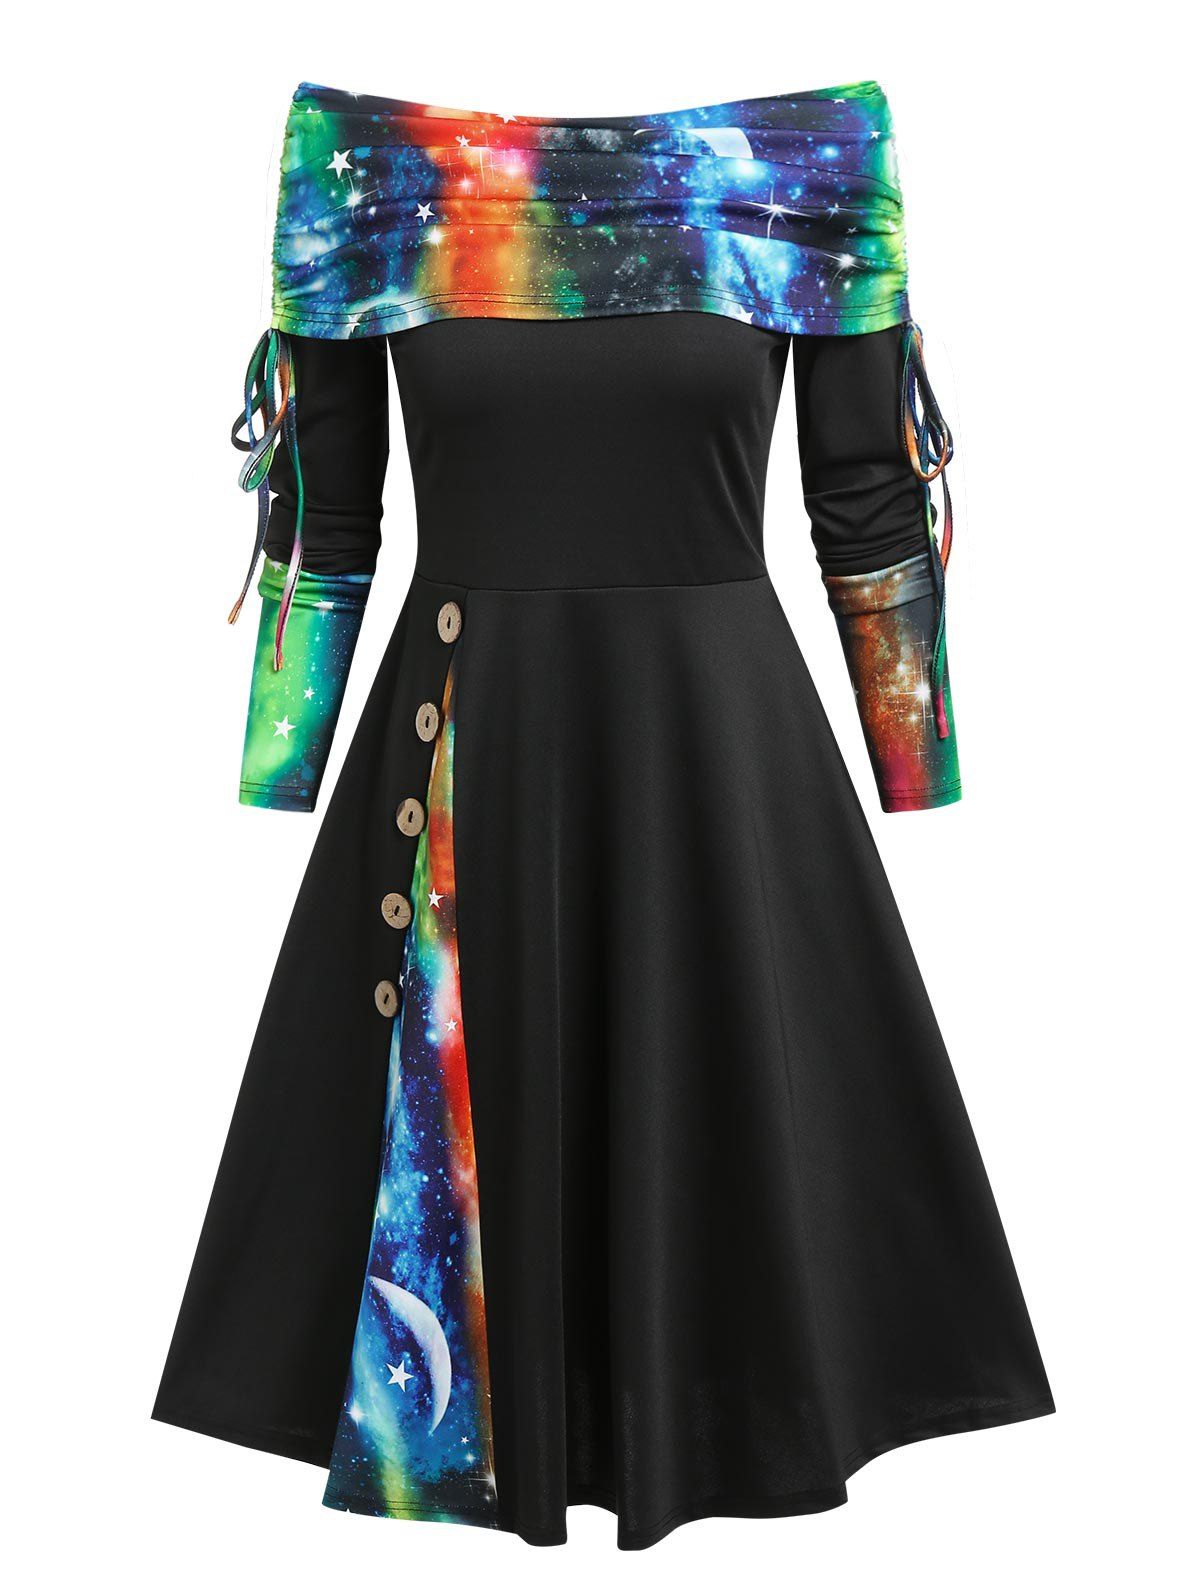 Vintage Galaxy Print Off Shoulder Cinched Tied Contrast A Line Dress - BLACK M